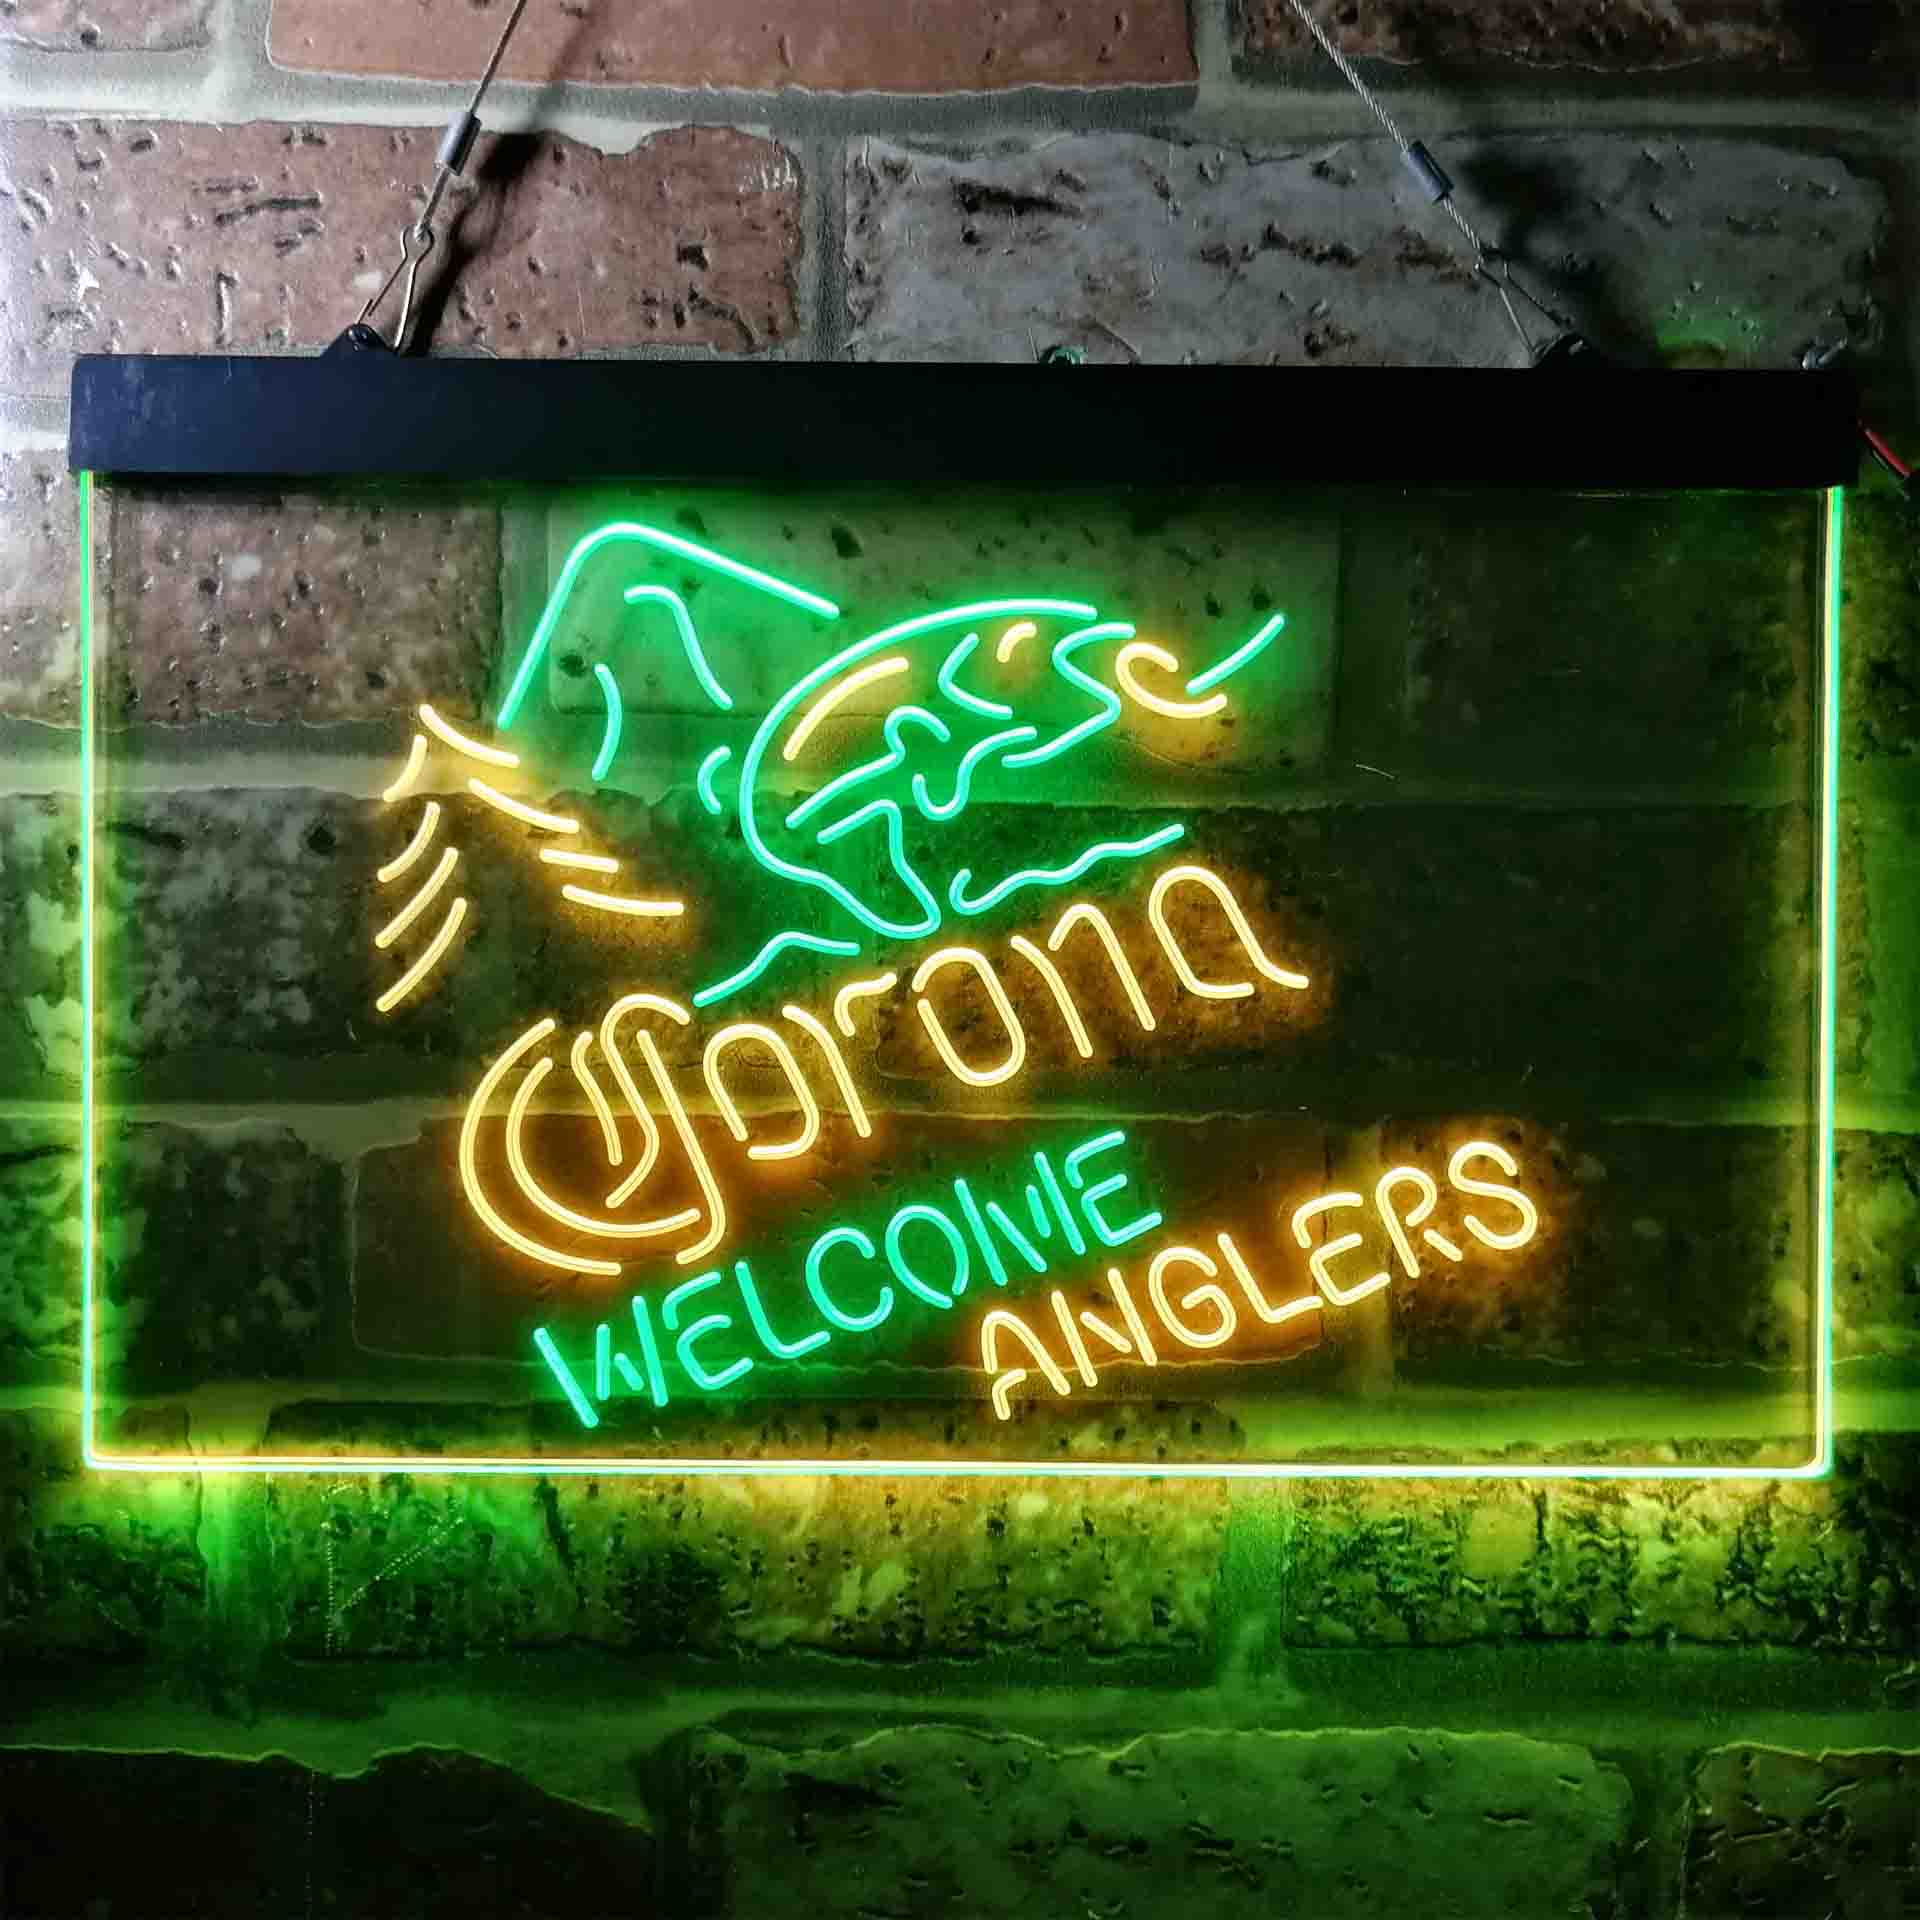 Corona Fishing Welcome Anglers Dual Color LED Neon Sign ProLedSign